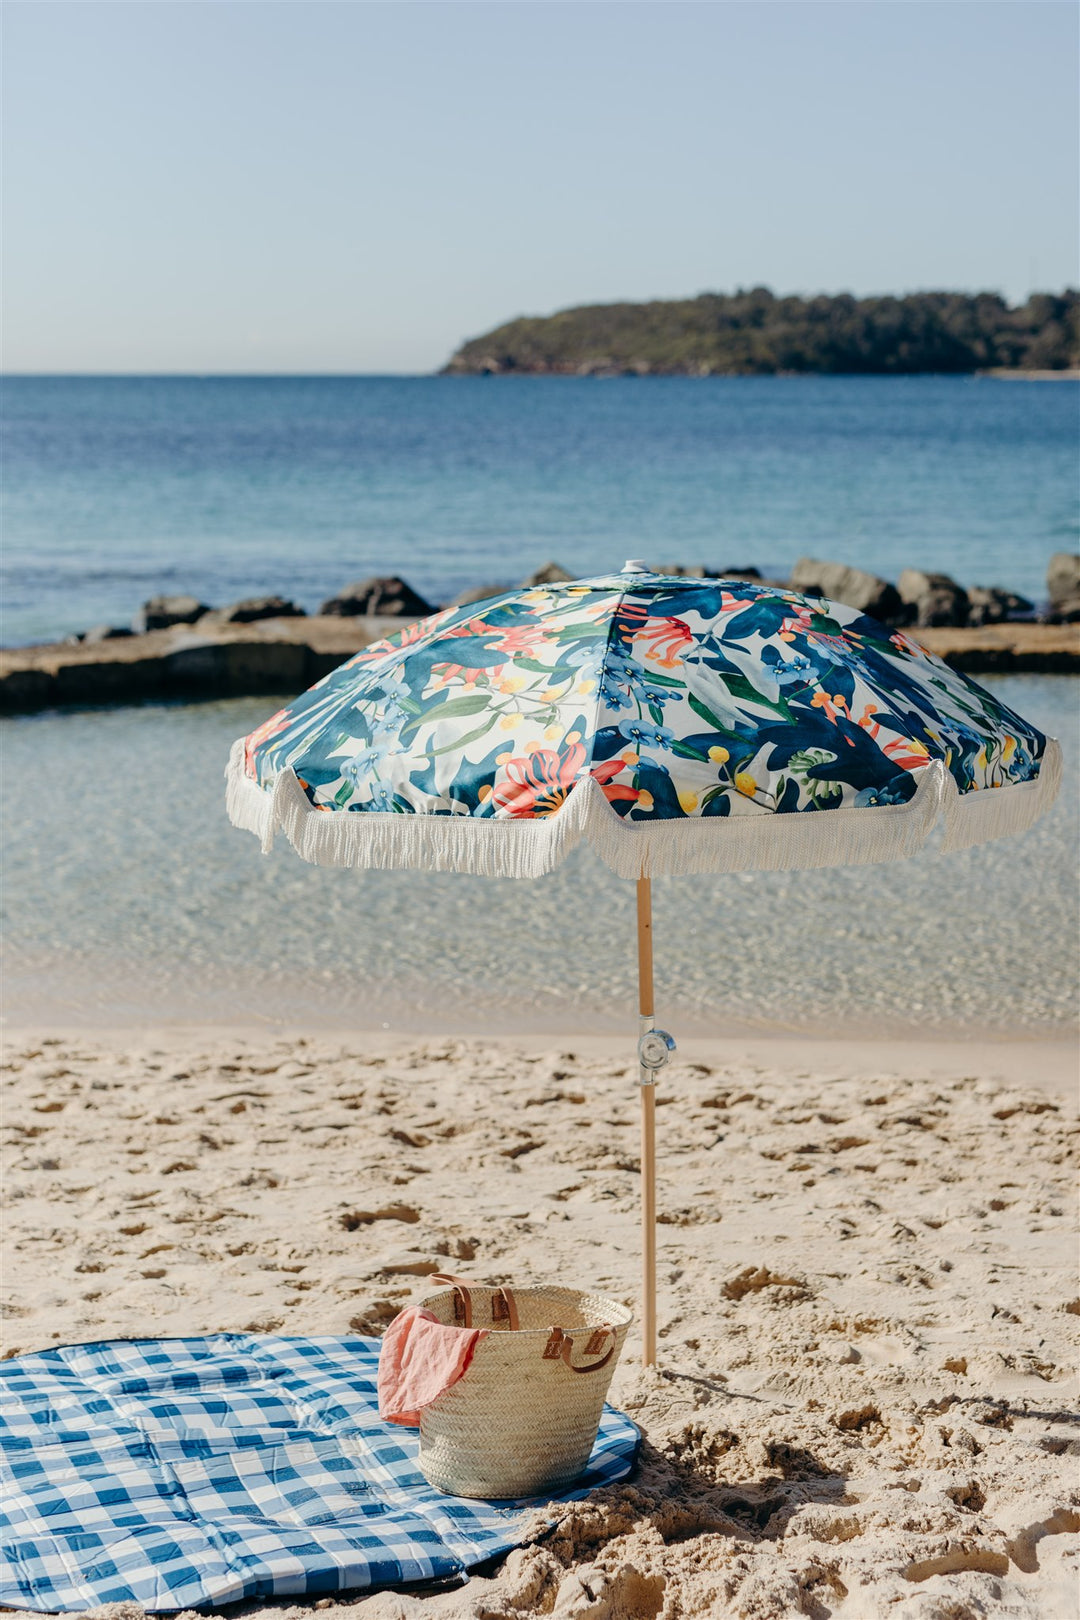 Premium Beach Umbrella - Field Day